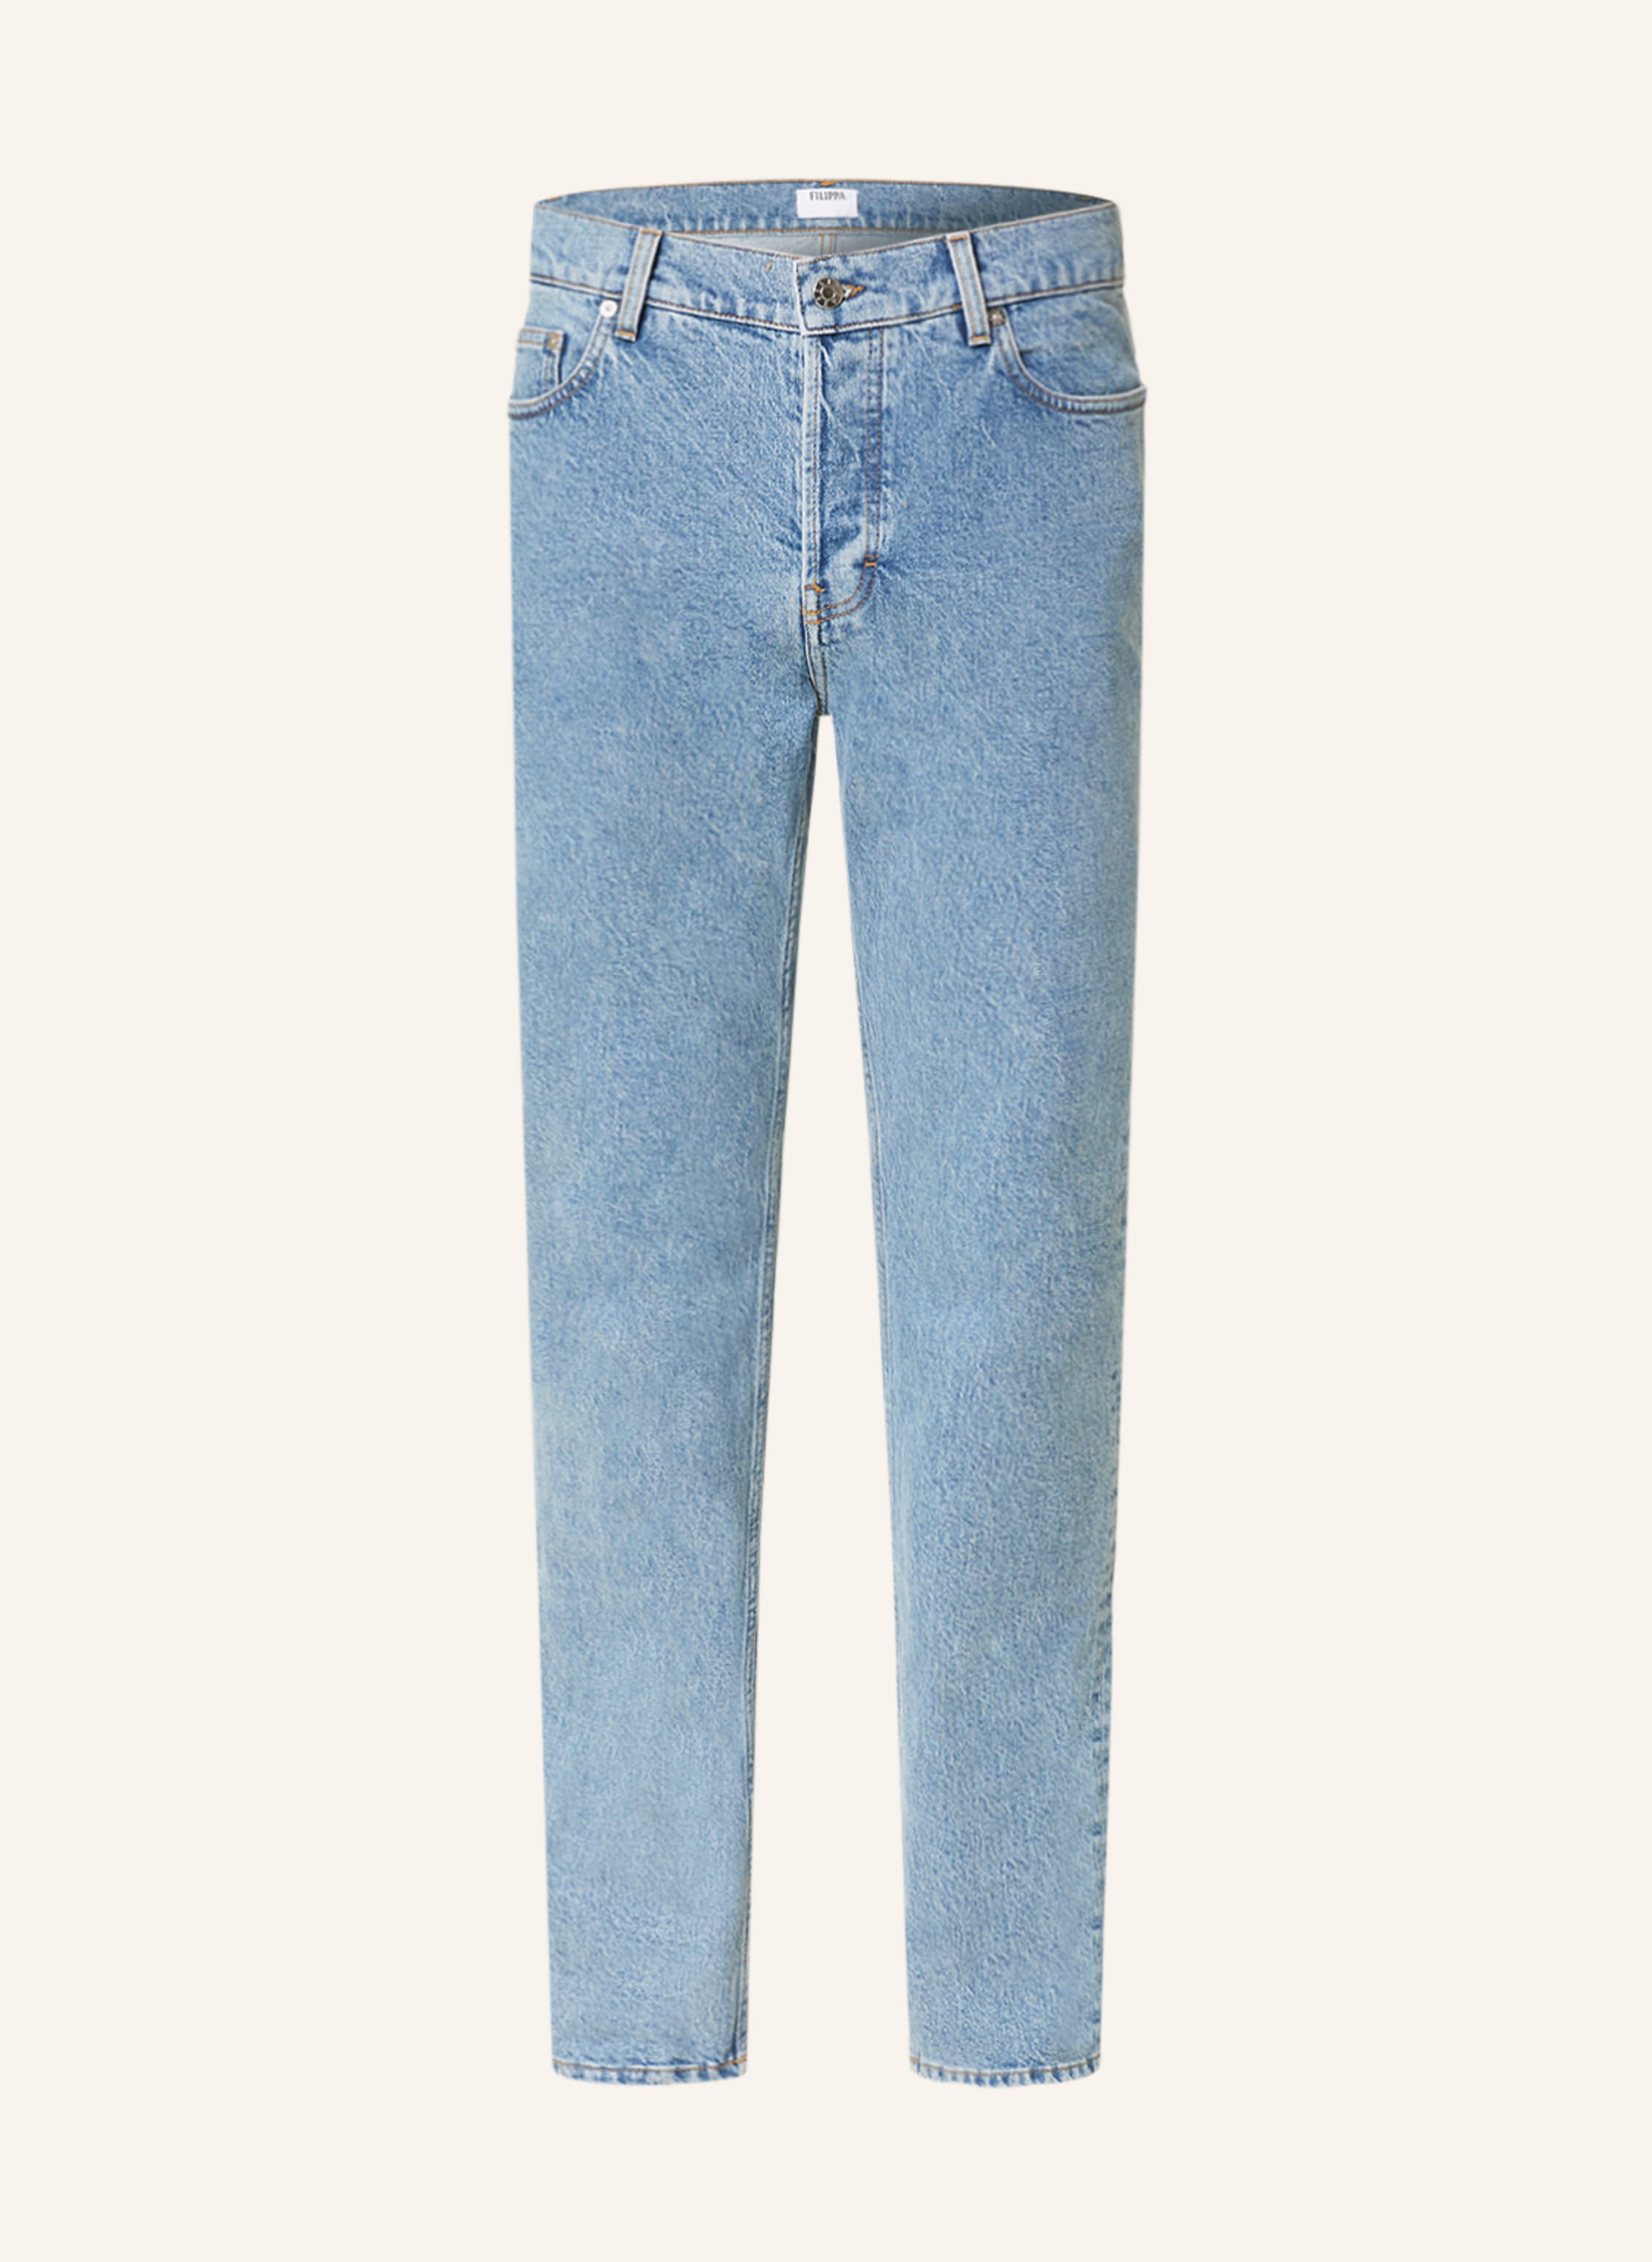 Filippa K Jeans regular fit in 9659 allover stone | Breuninger